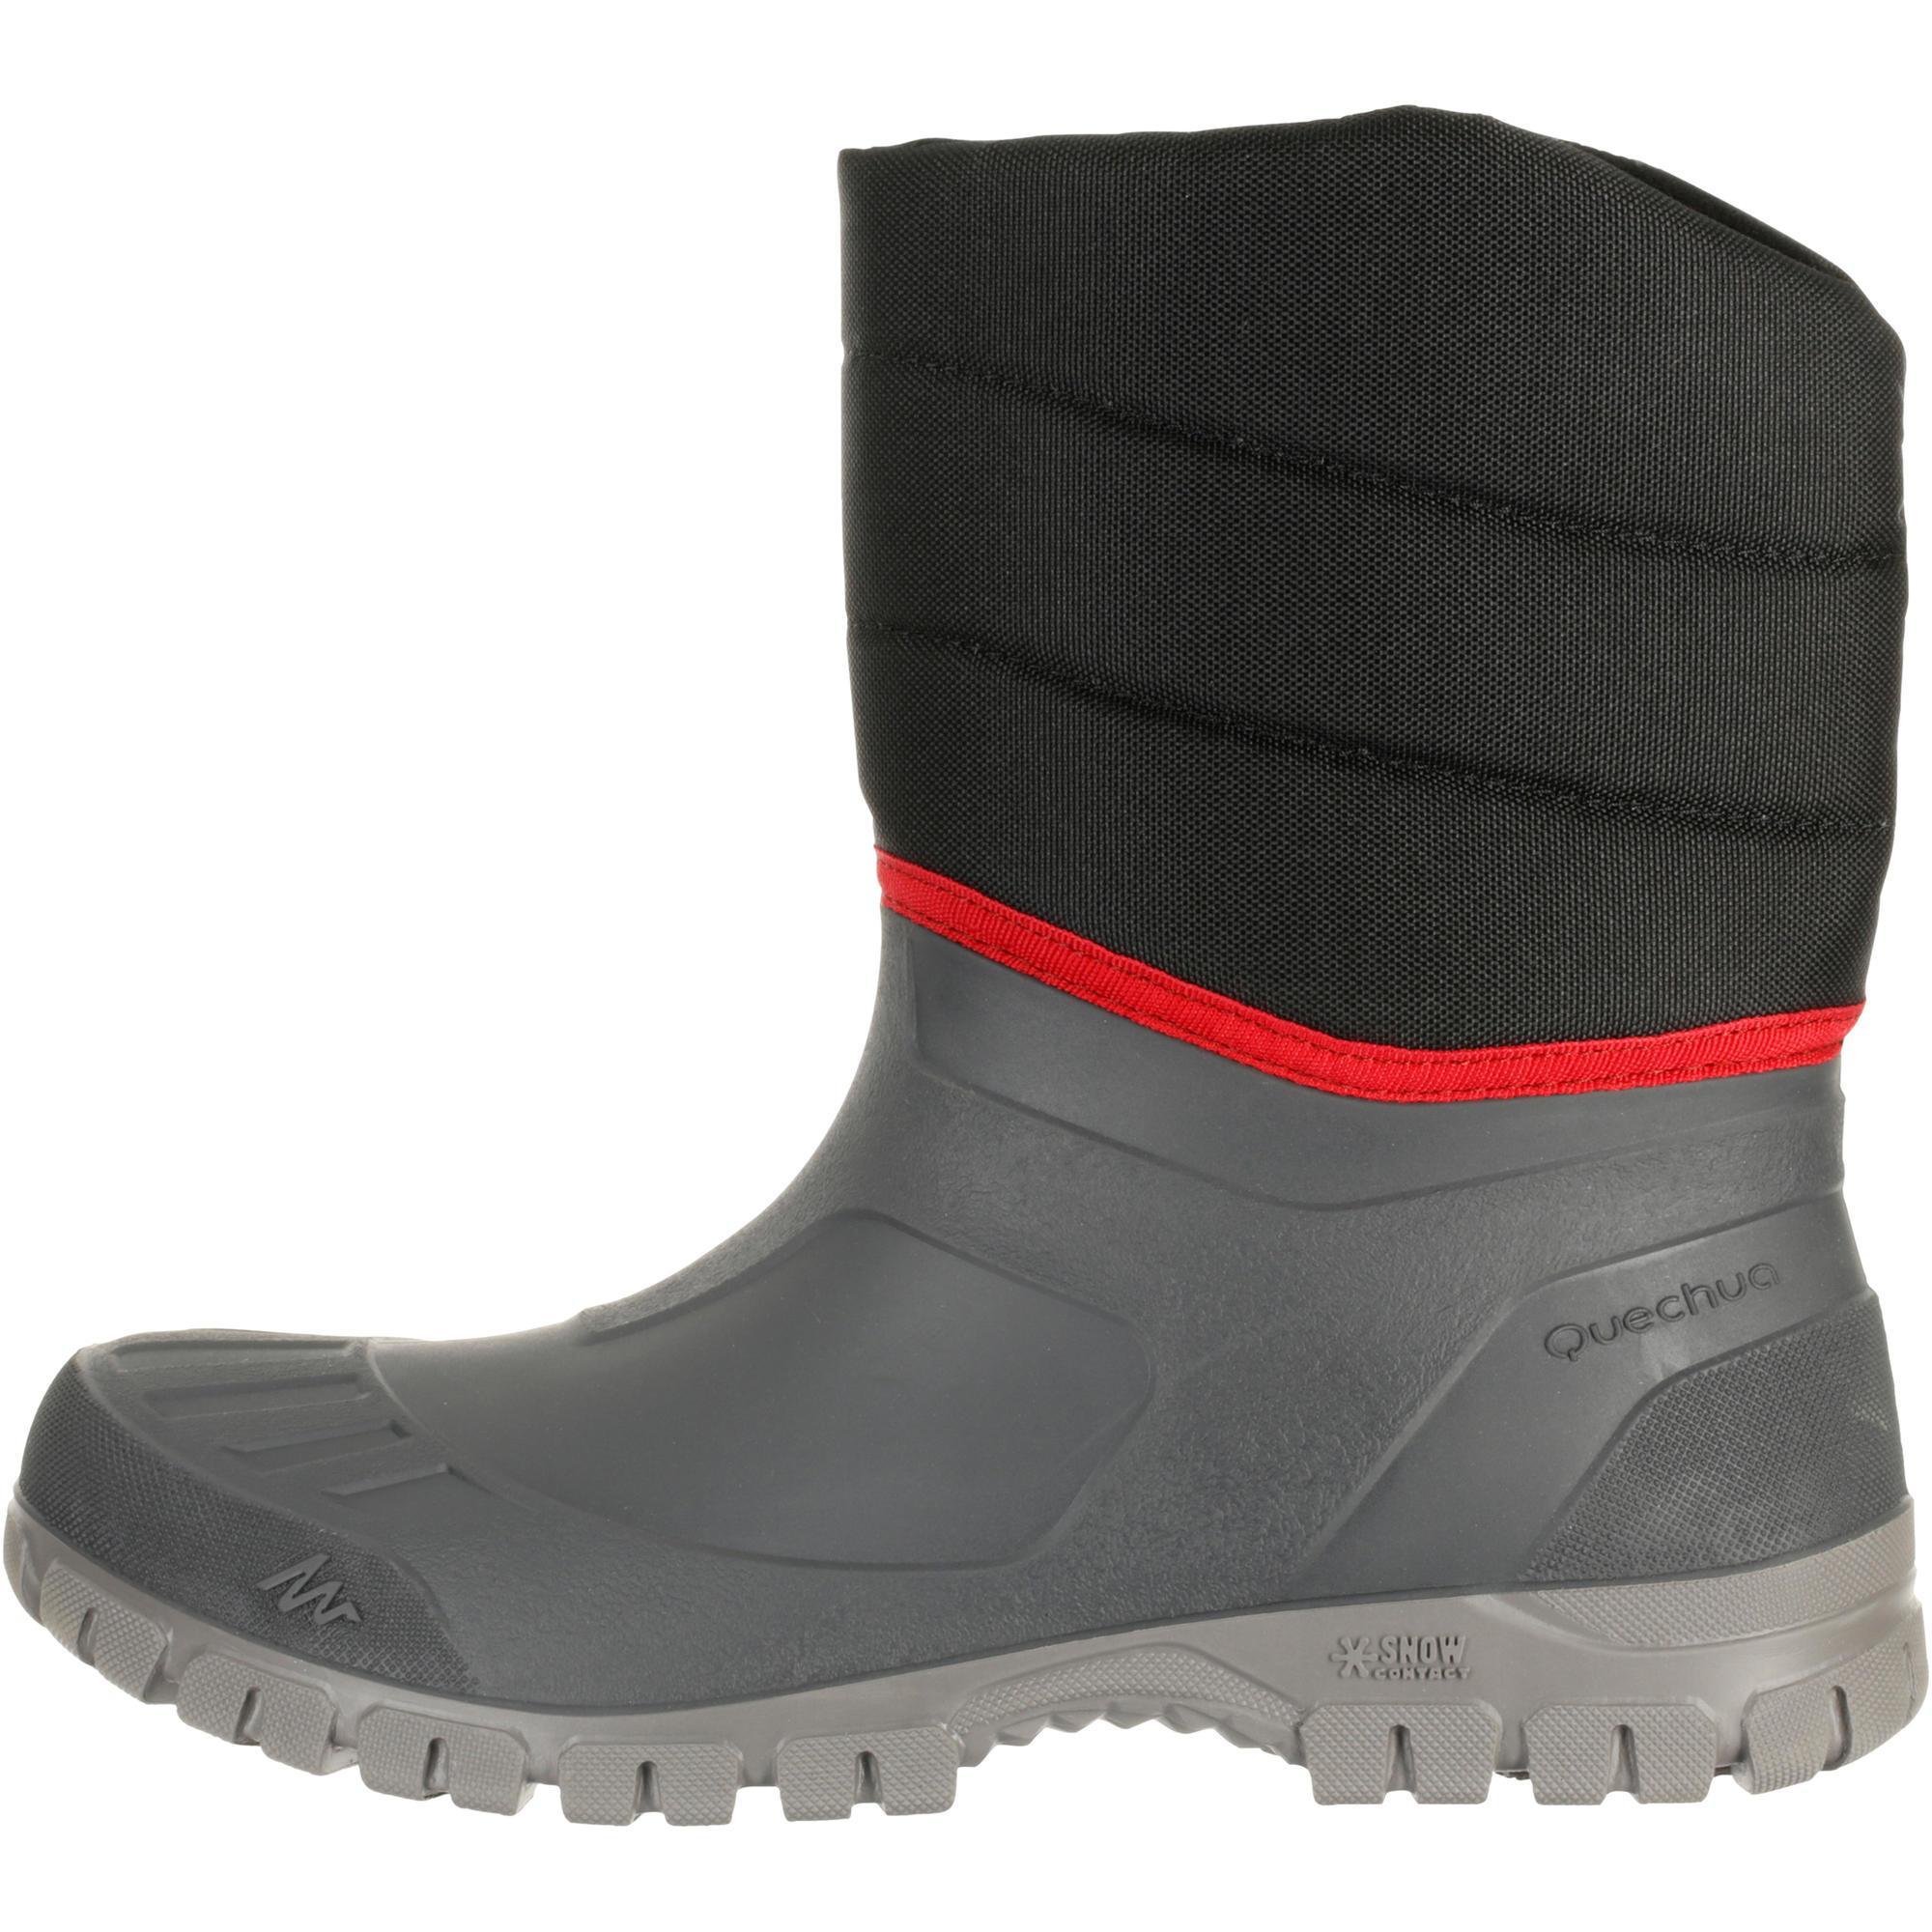 mens warm waterproof boots